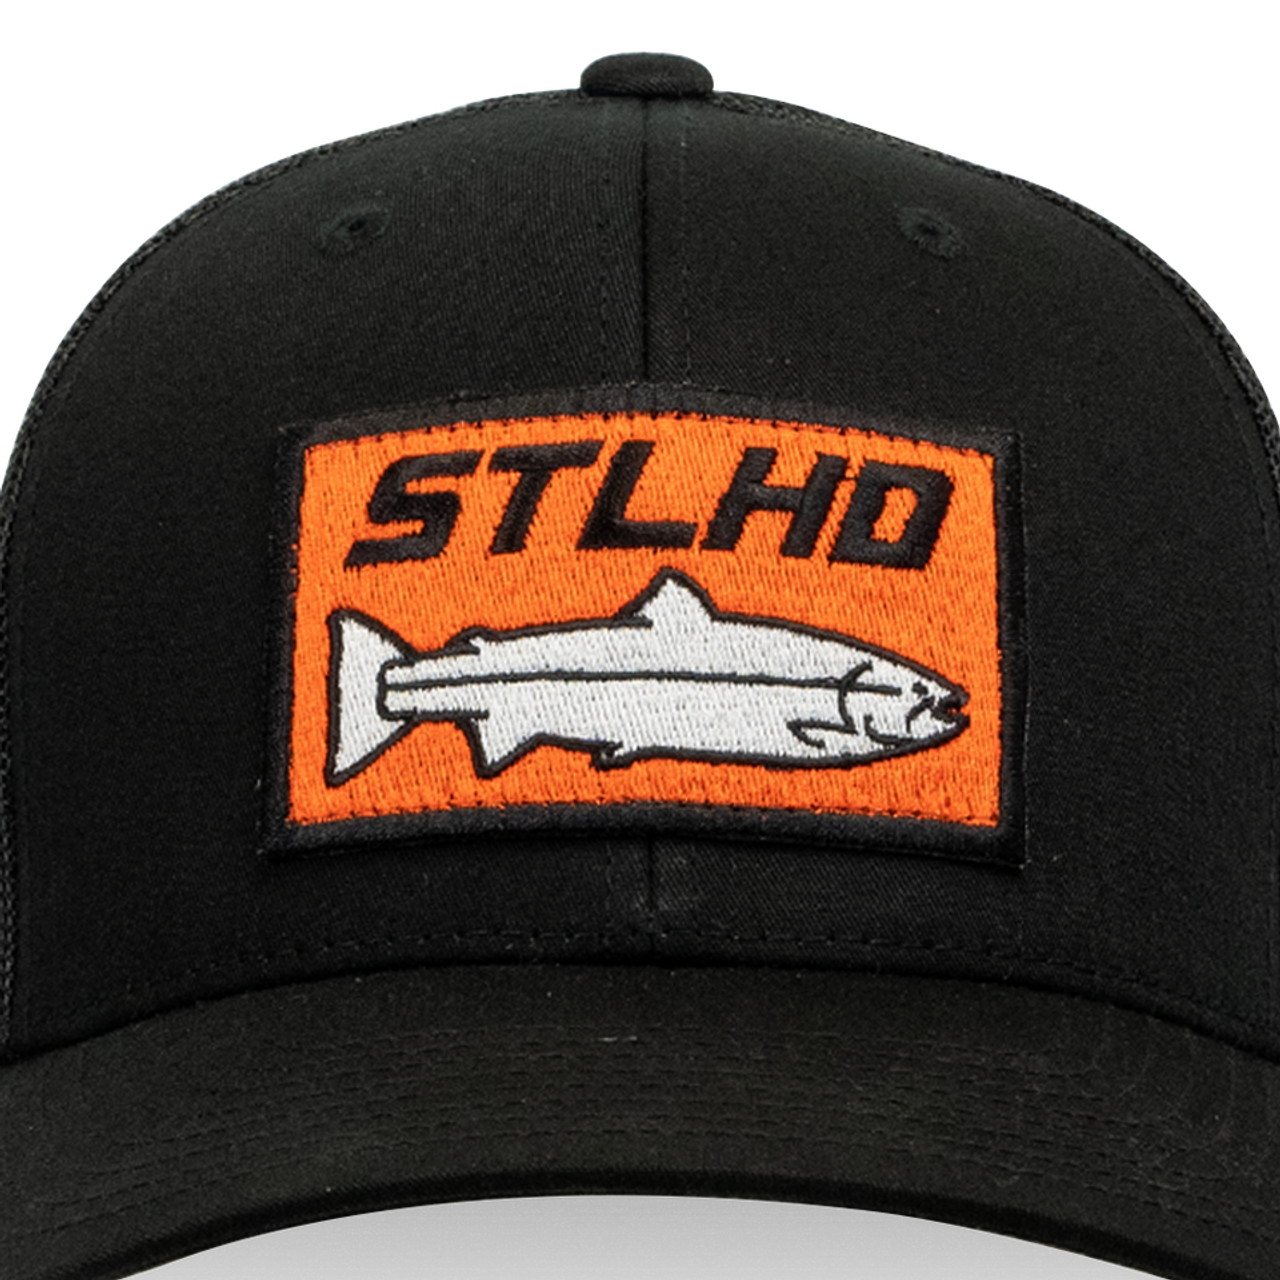 STLHD Rogue Black Snapback Trucker Hat